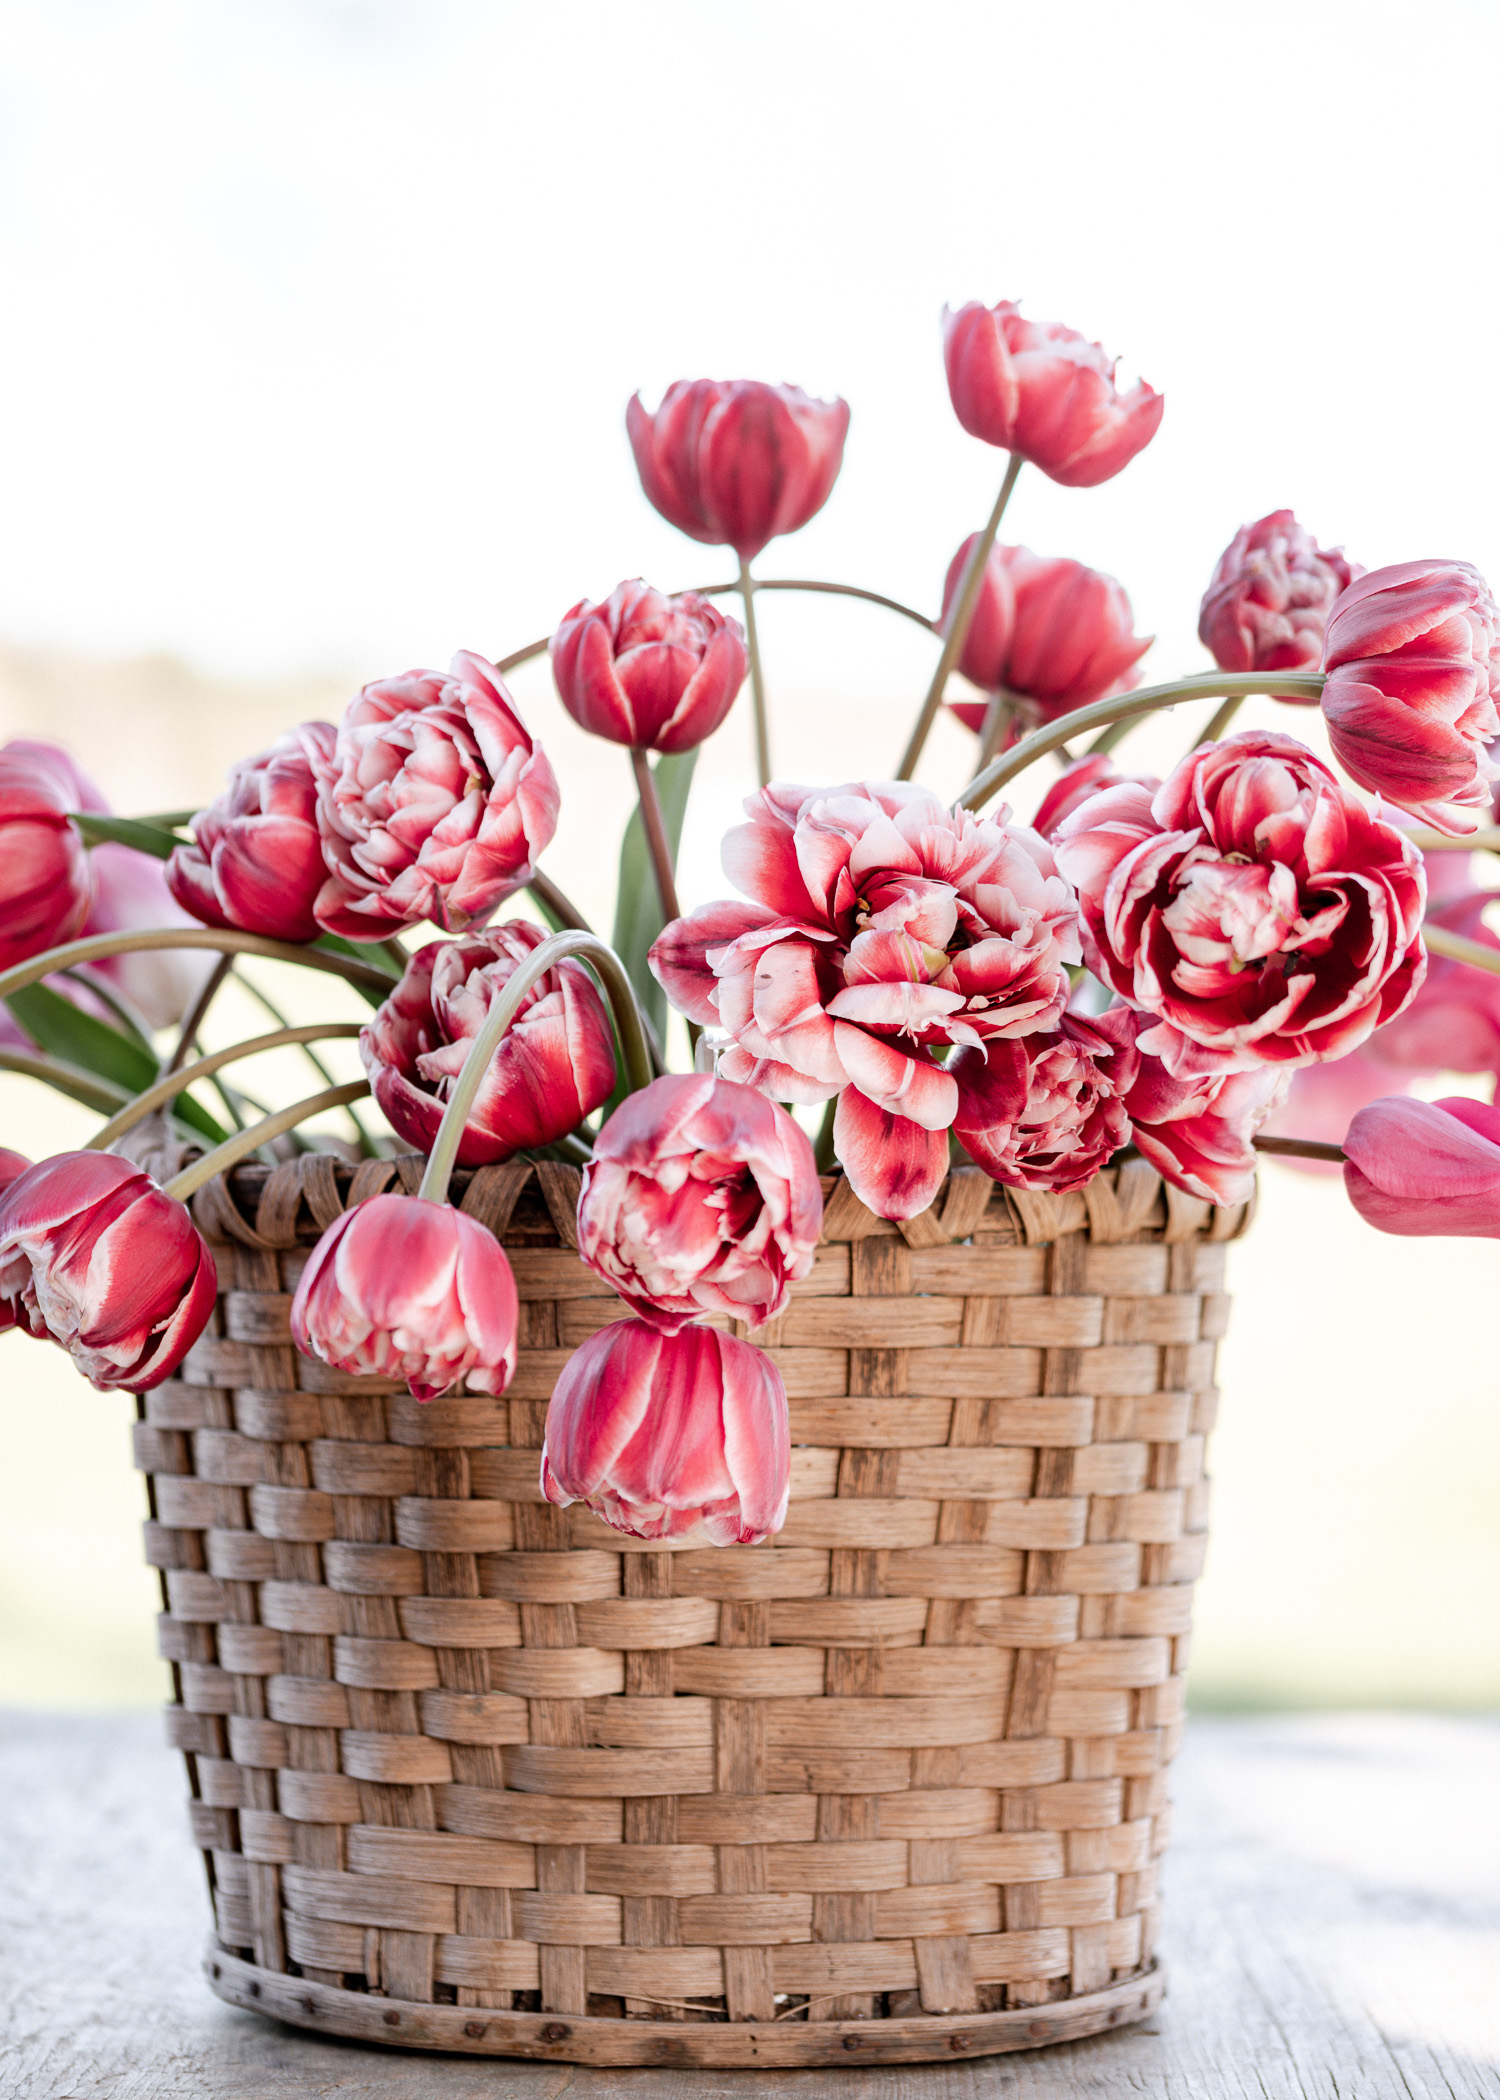 Tulip Renown in a antique basket